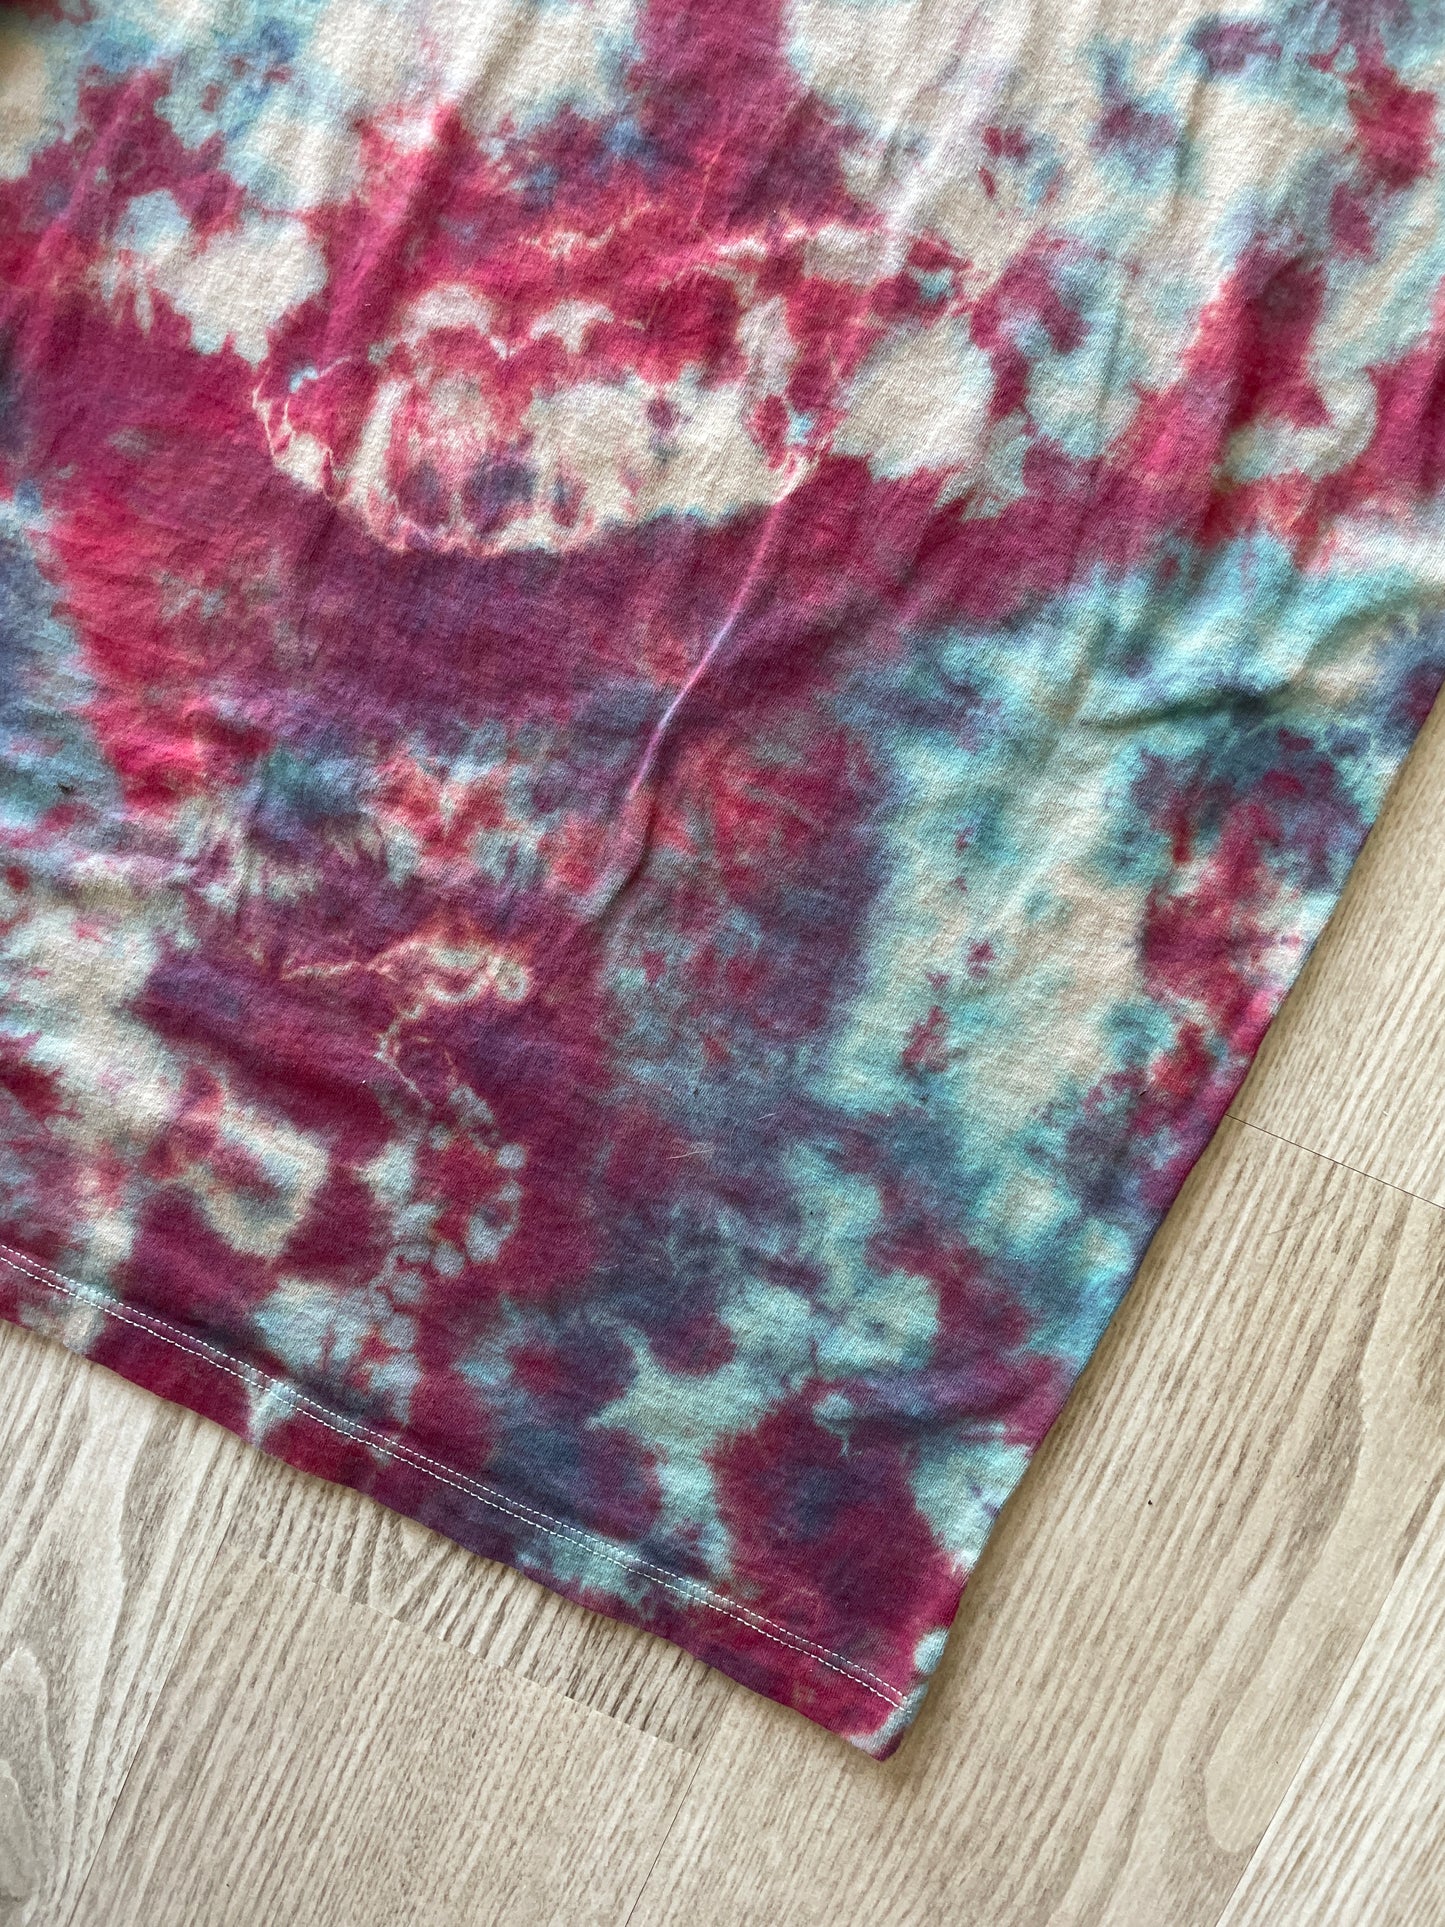 MEDIUM Men’s DJ Popeye Handmade Tie Dye T-Shirt | One-Of-a-Kind Red and Blue Short Sleeve